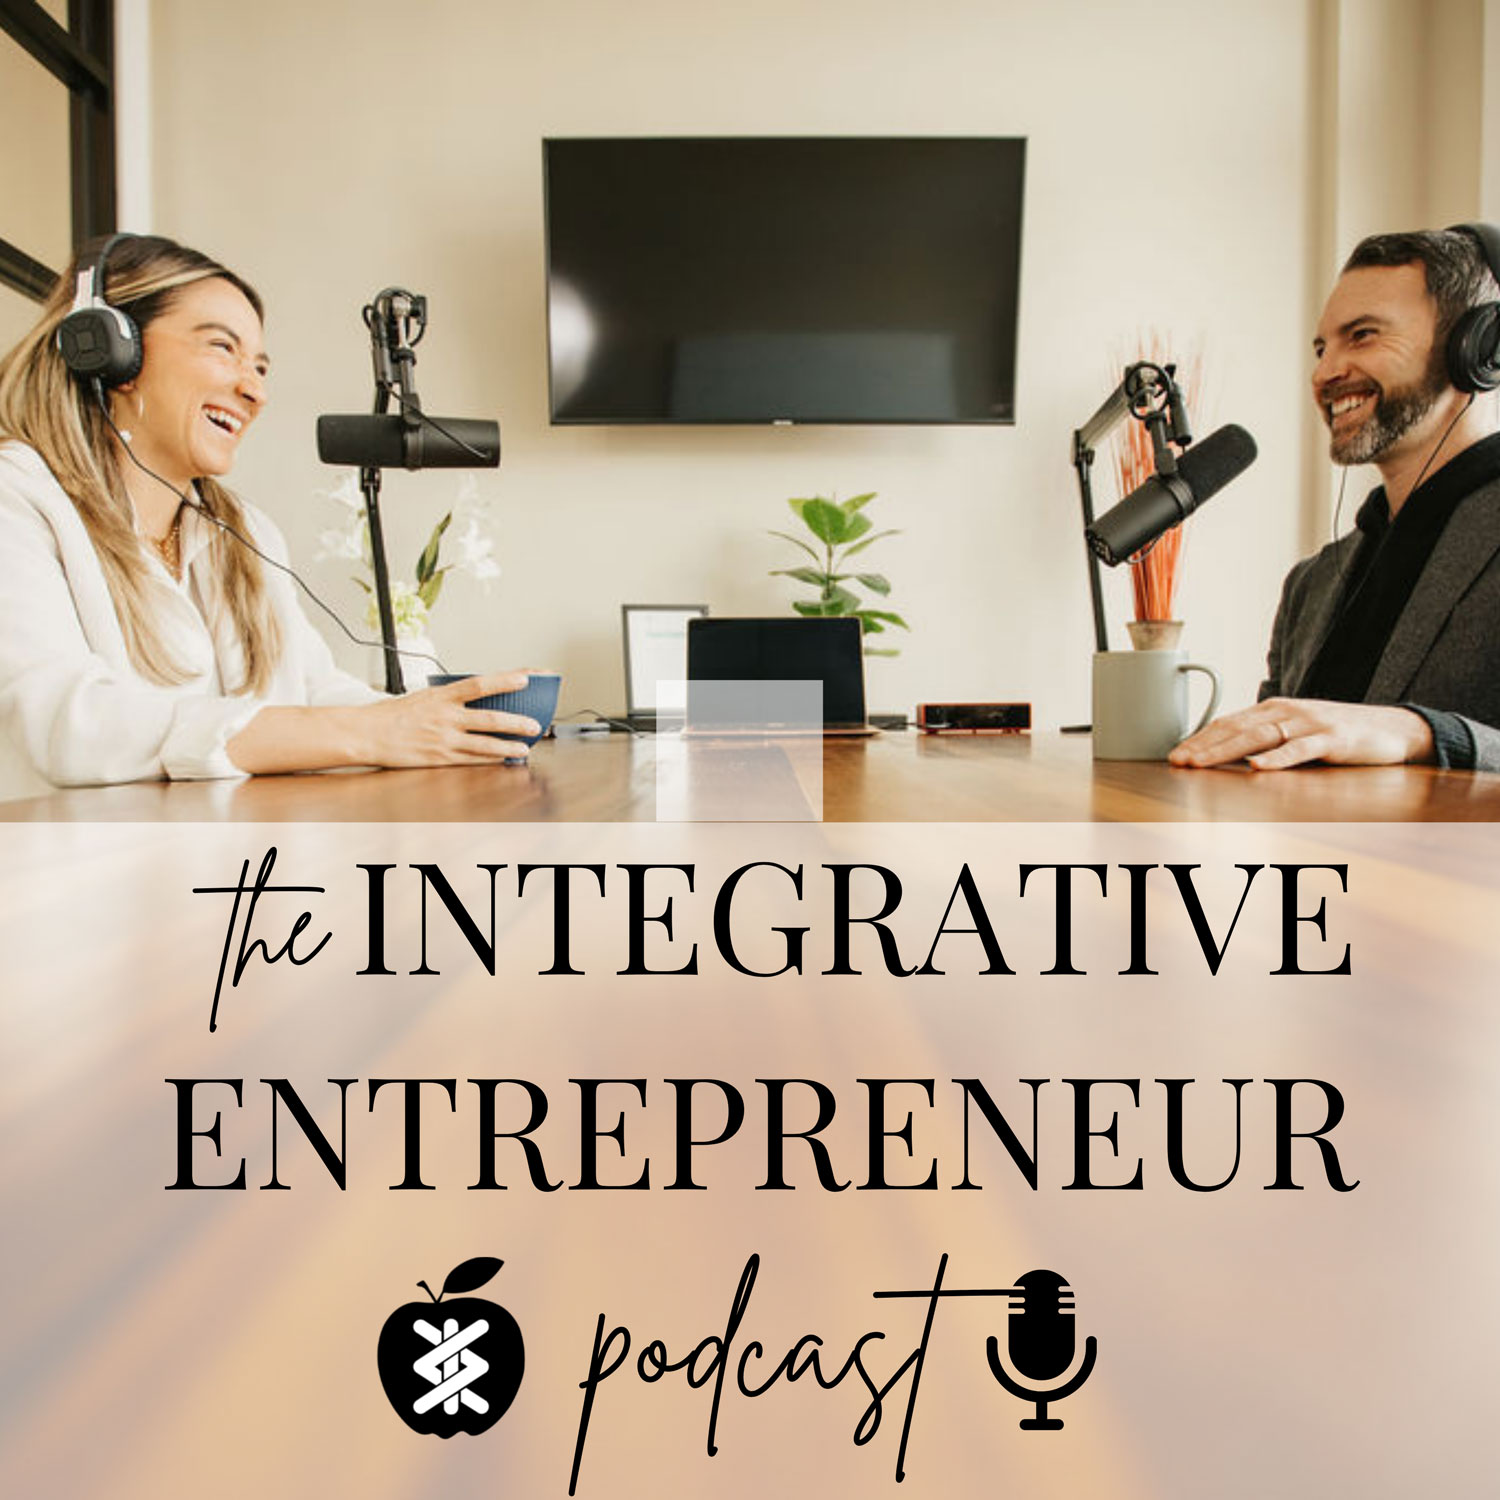 The Integrative Entrepreneur Podcast